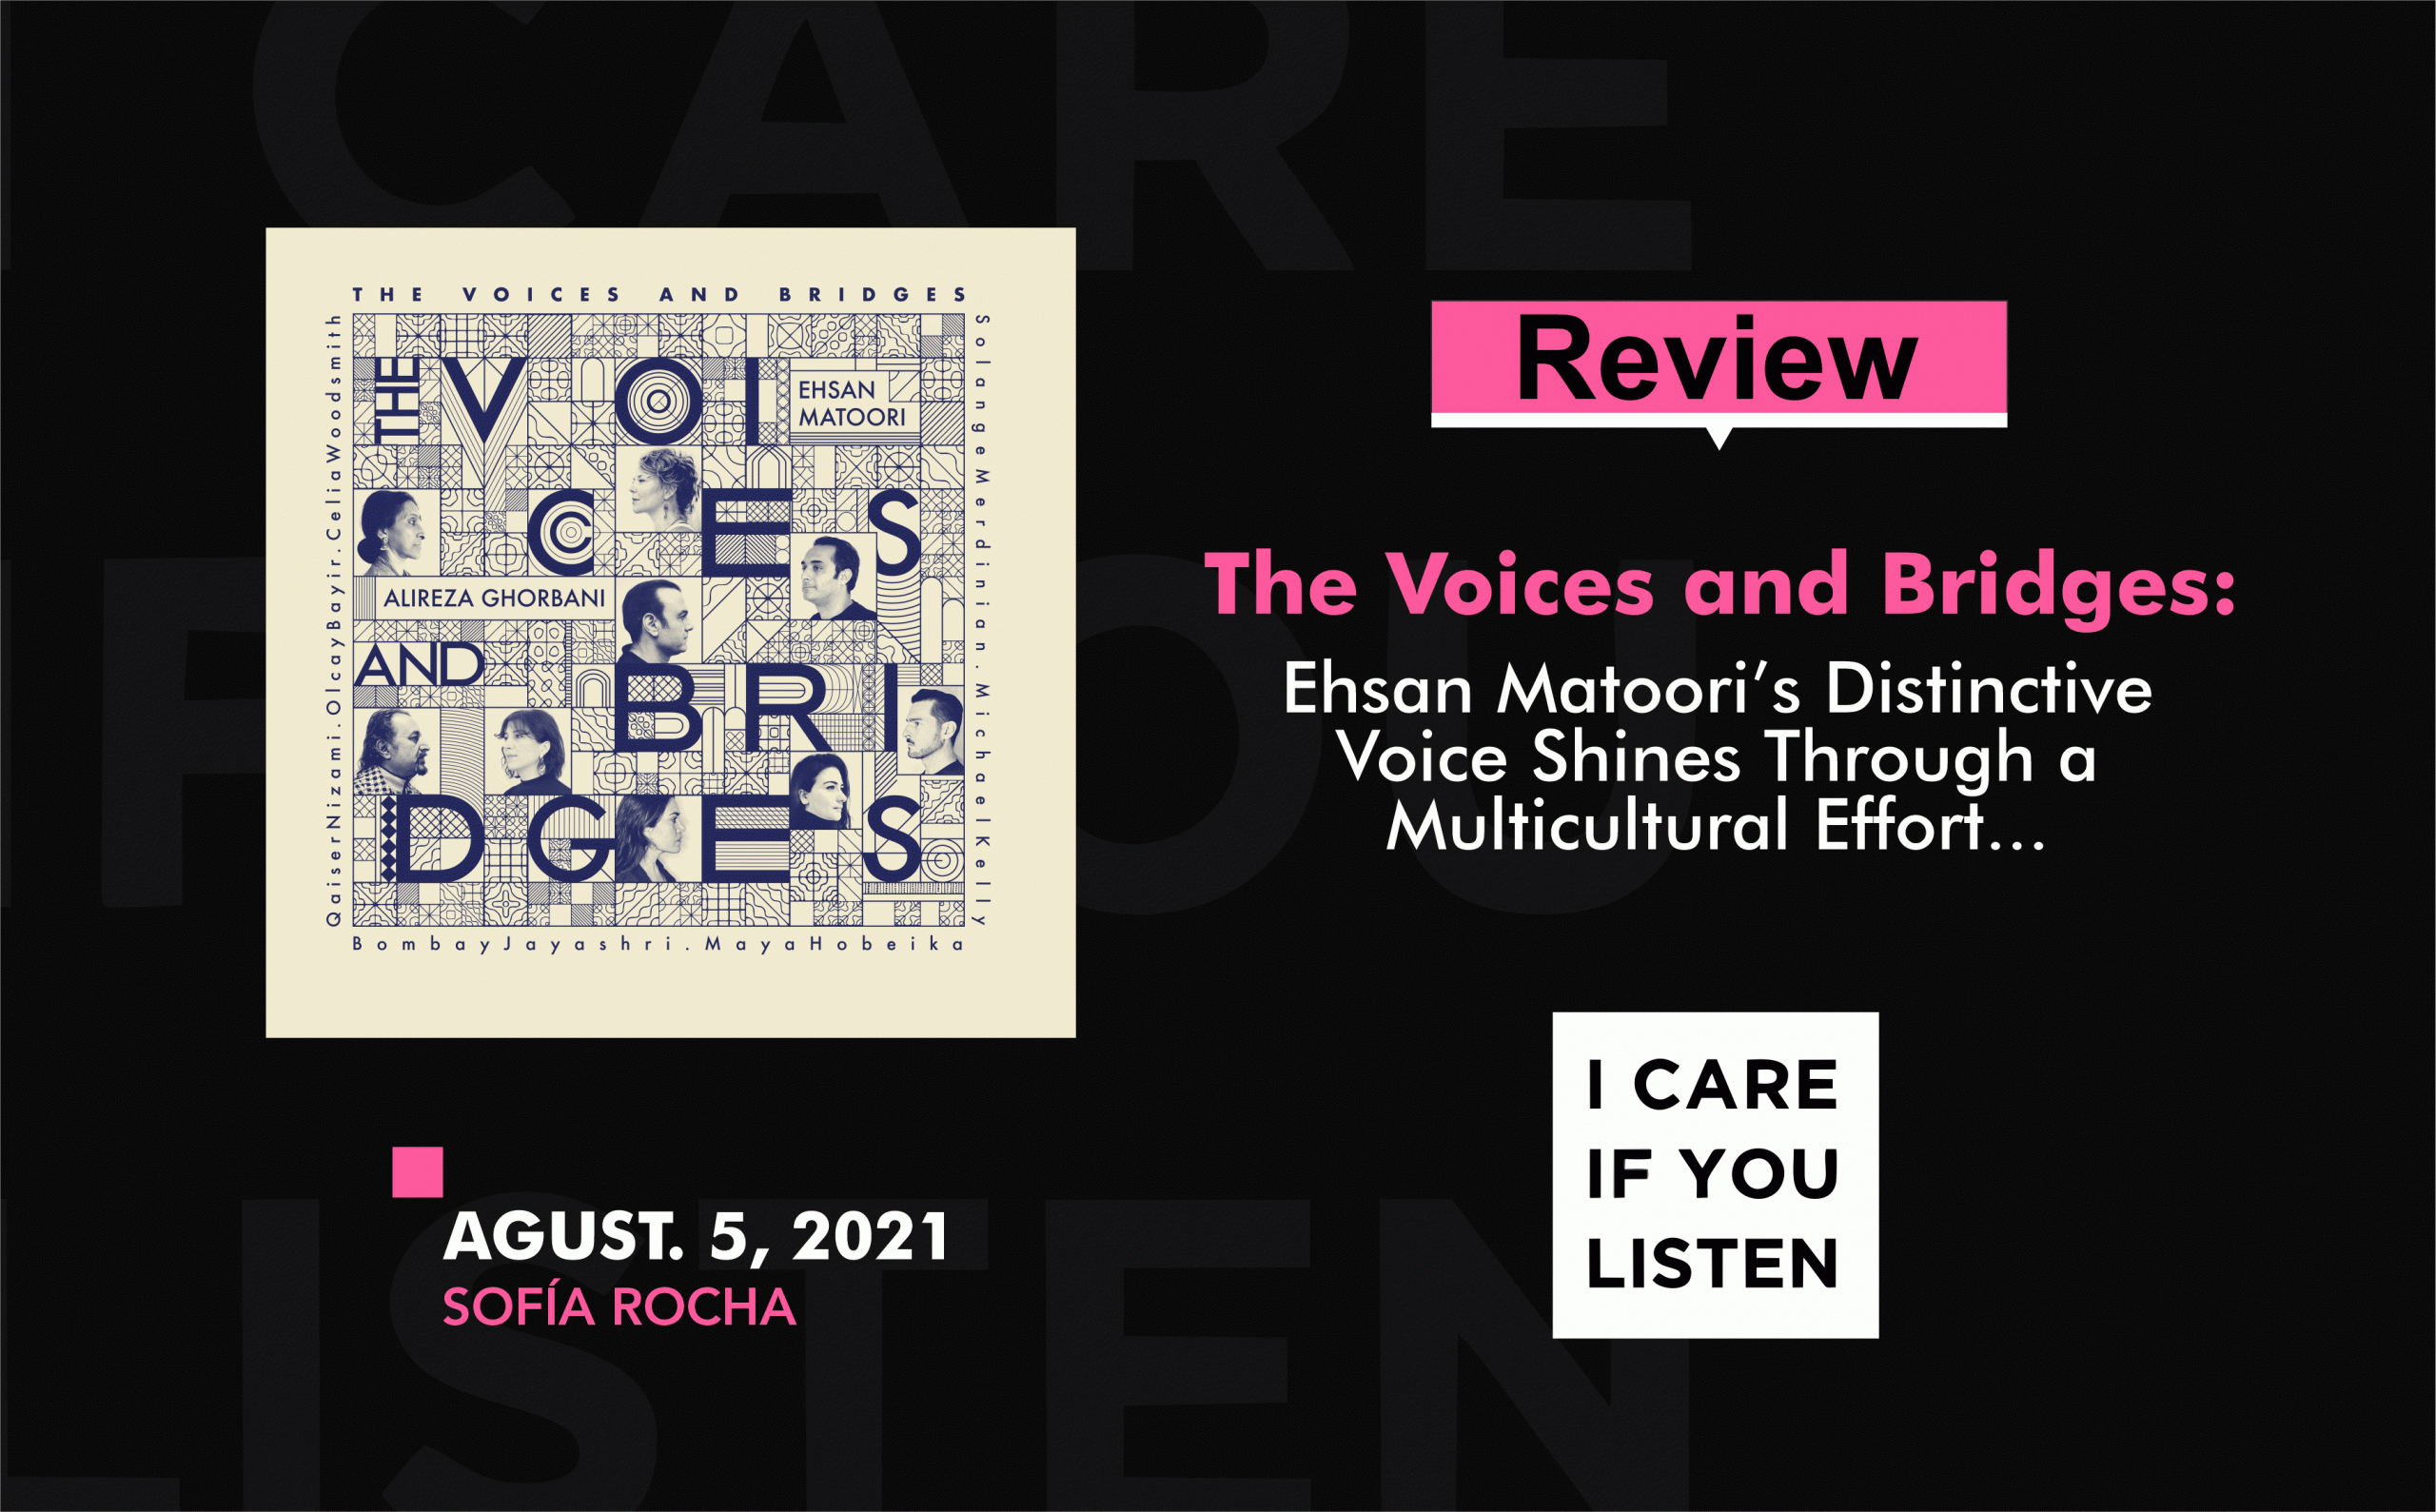 The Voices and Bridges: Ehsan Matoori’s Distinctive Voice Shines Through a Multicultural Effort